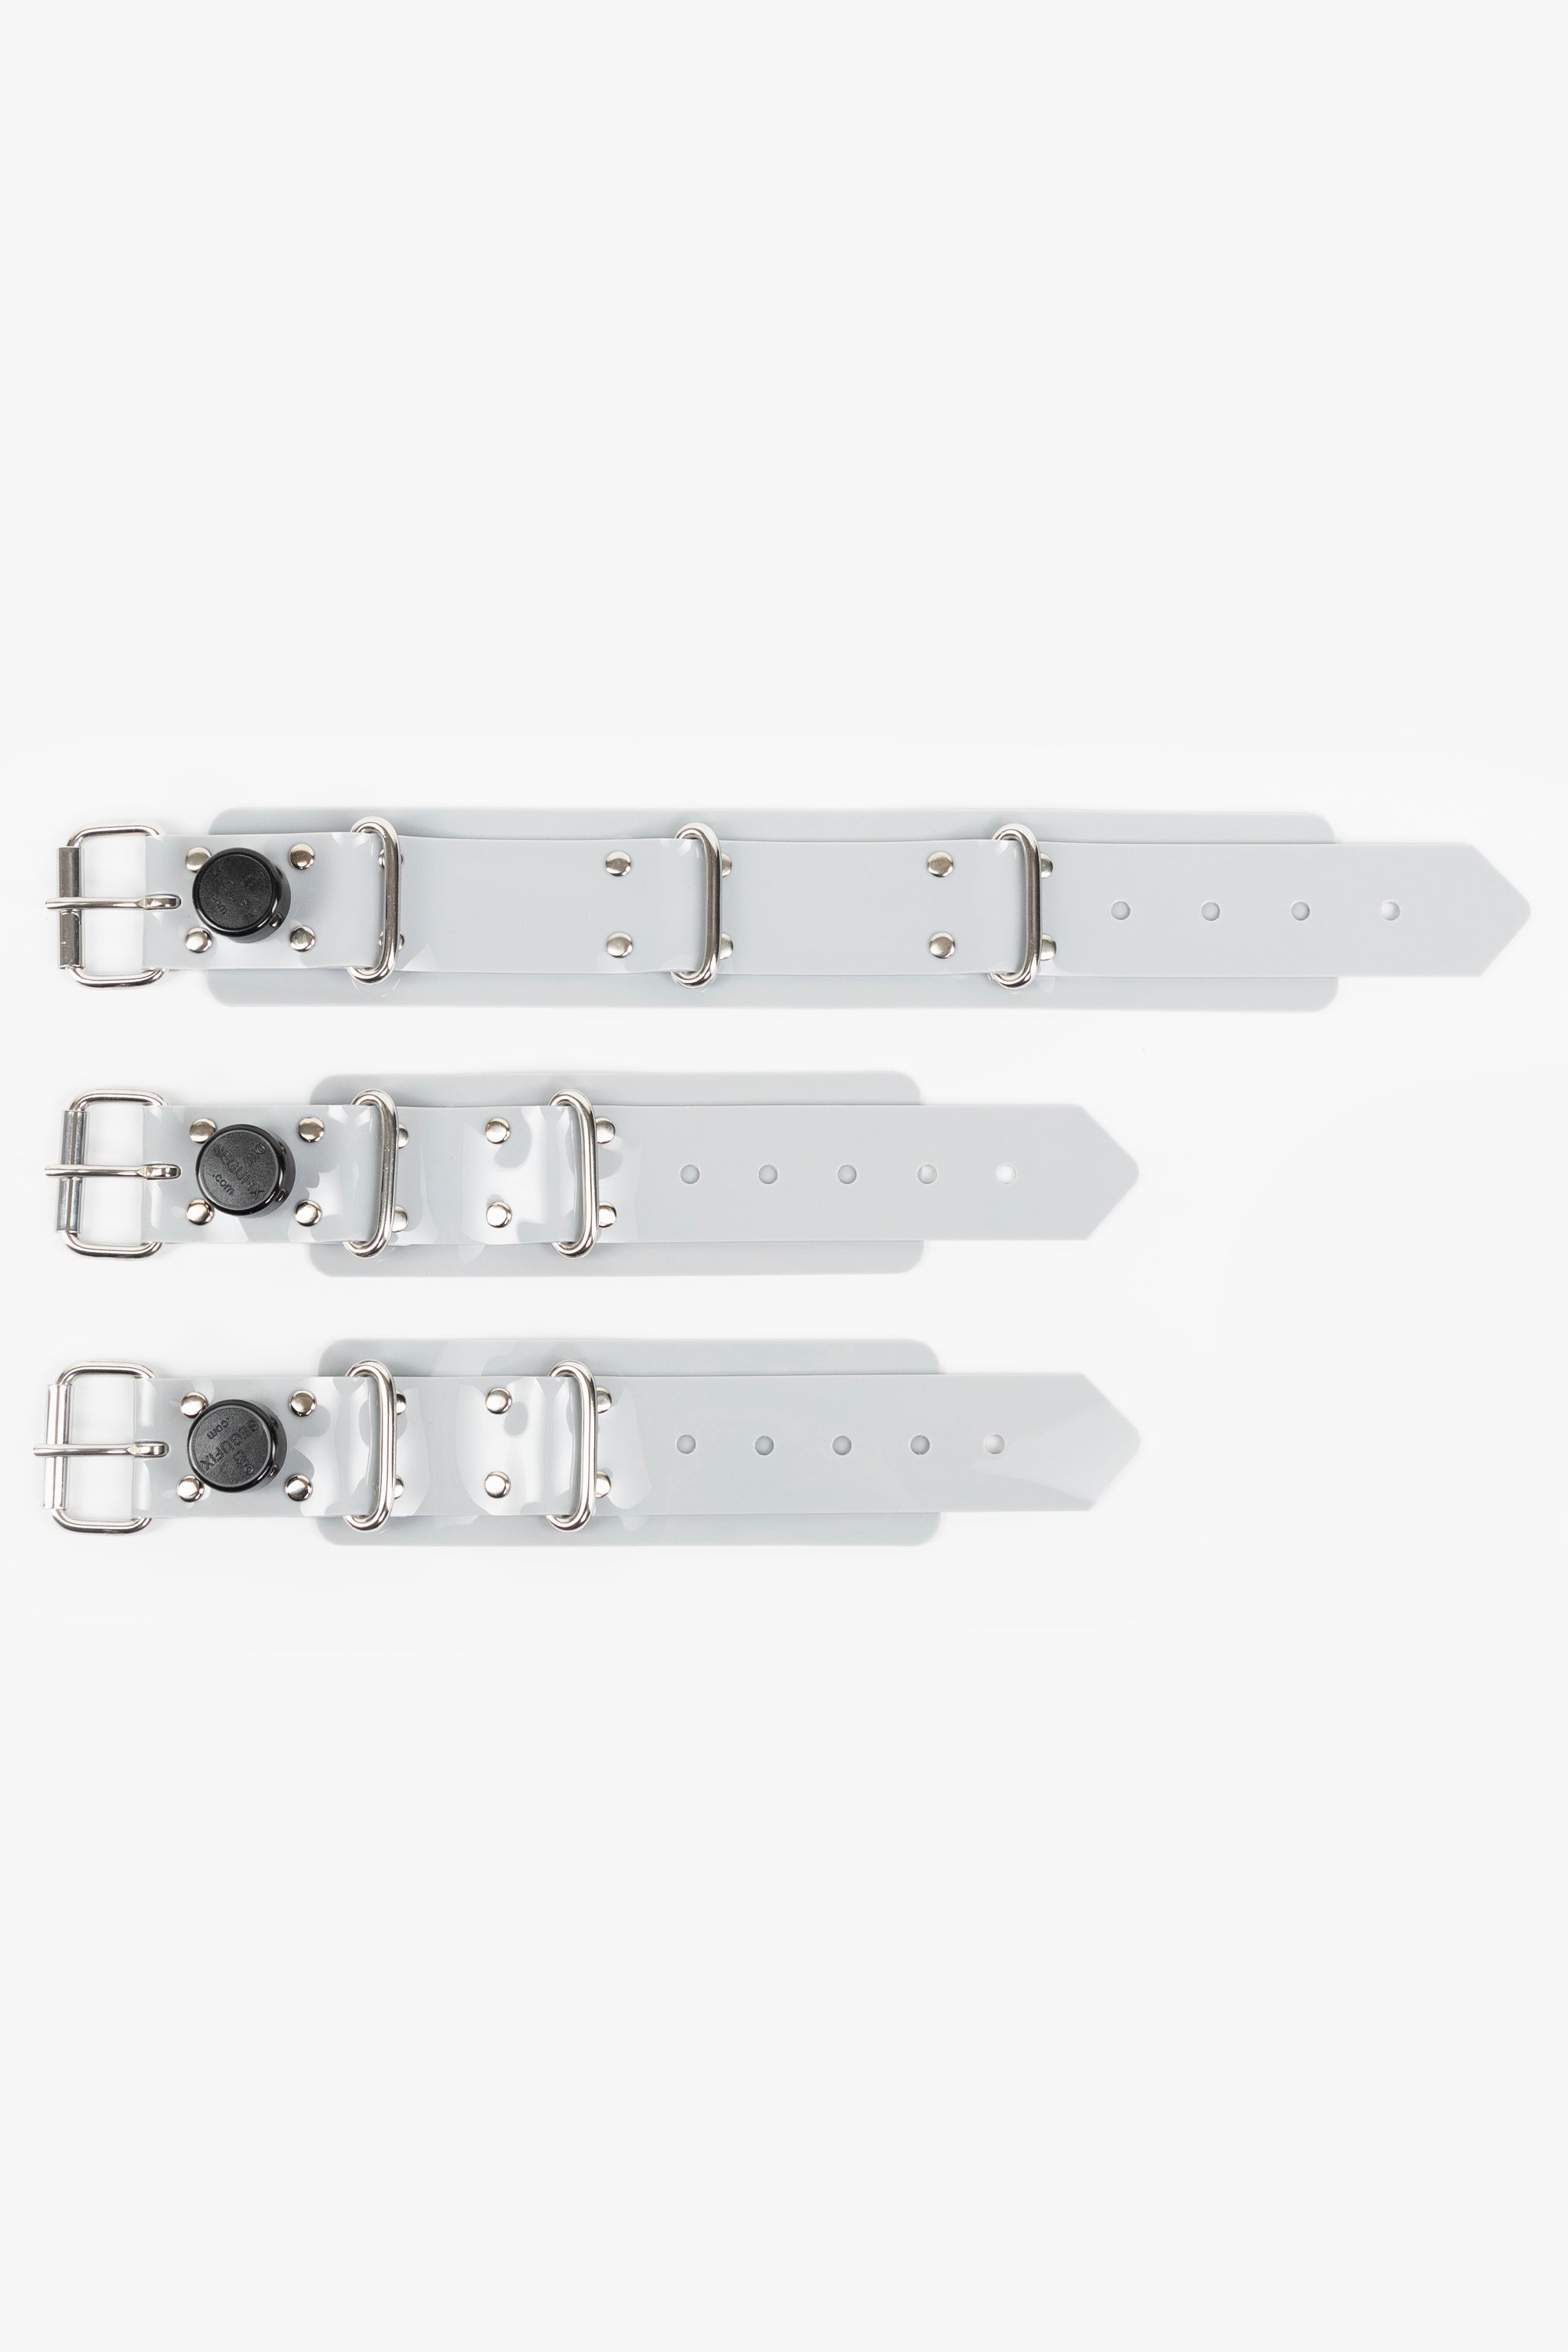 Lockable segufix collar and wrist cuffs set, light grey/chrome